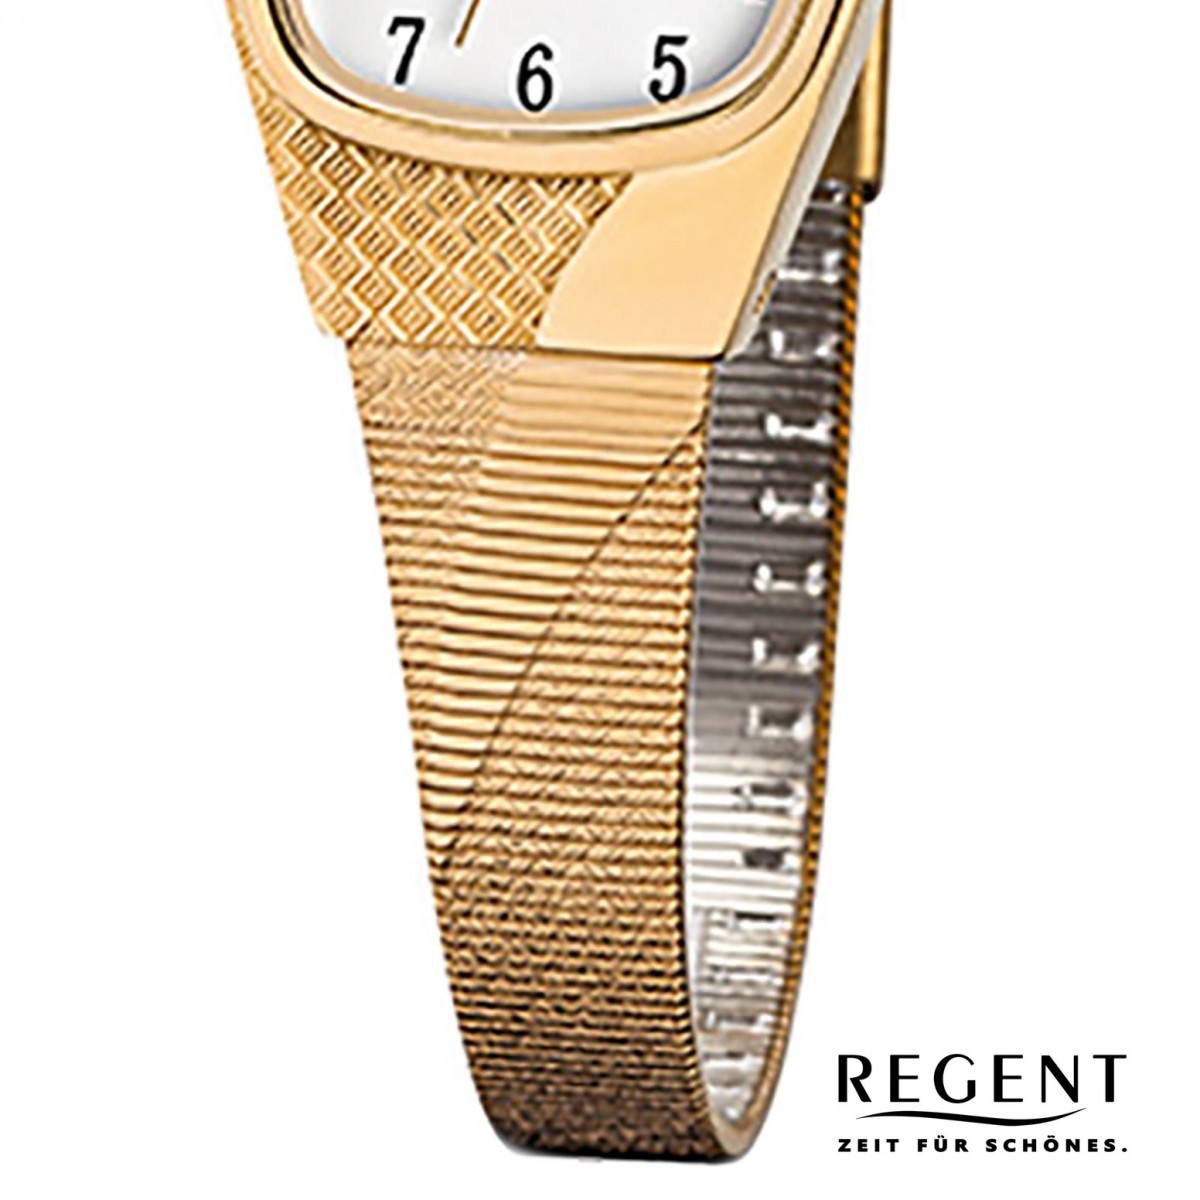 Regent Damen-Uhr - Metallarmband URF624 gold - Quarzwerk - Edelstahl